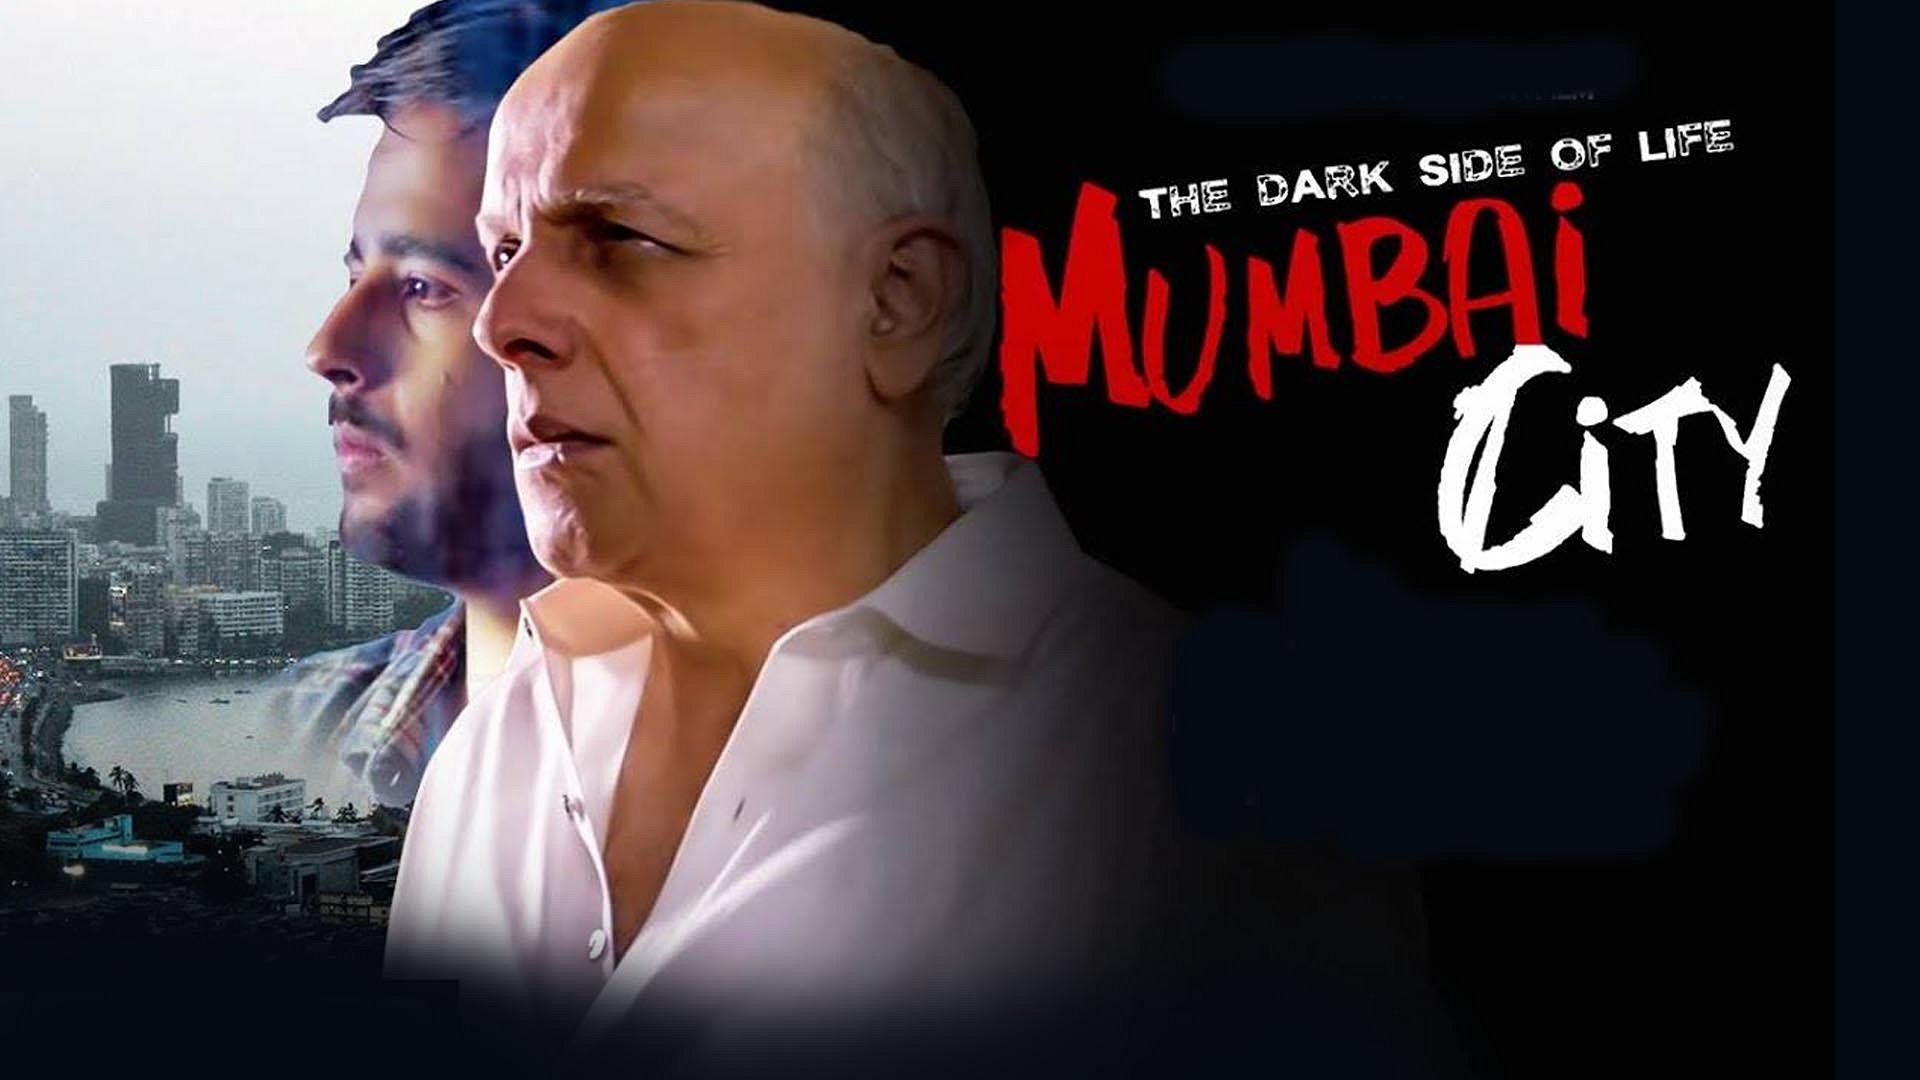 The Dark Side Of Life - Mumbai City